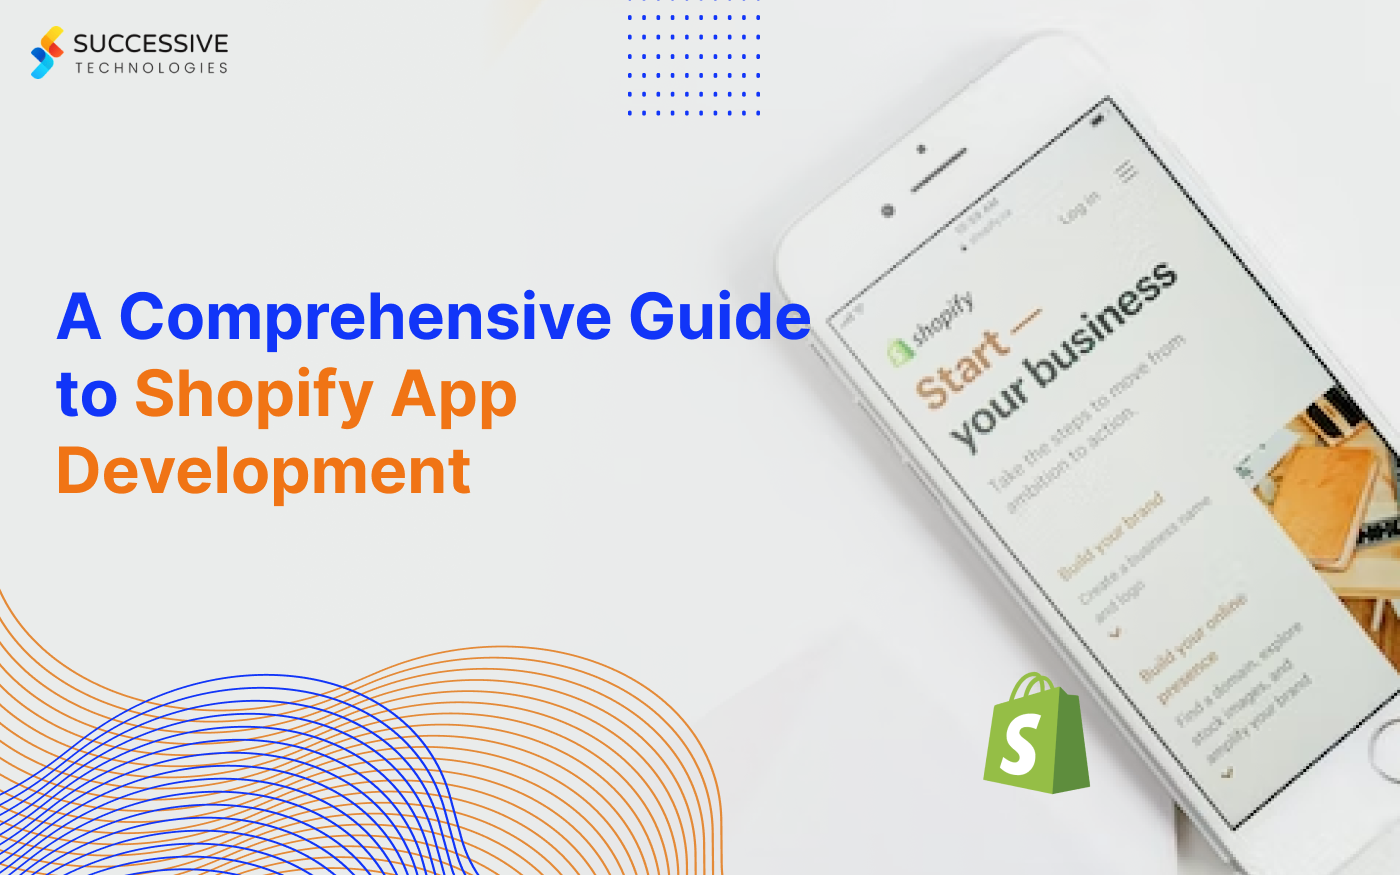 Shopify App Development: A Complete Guide